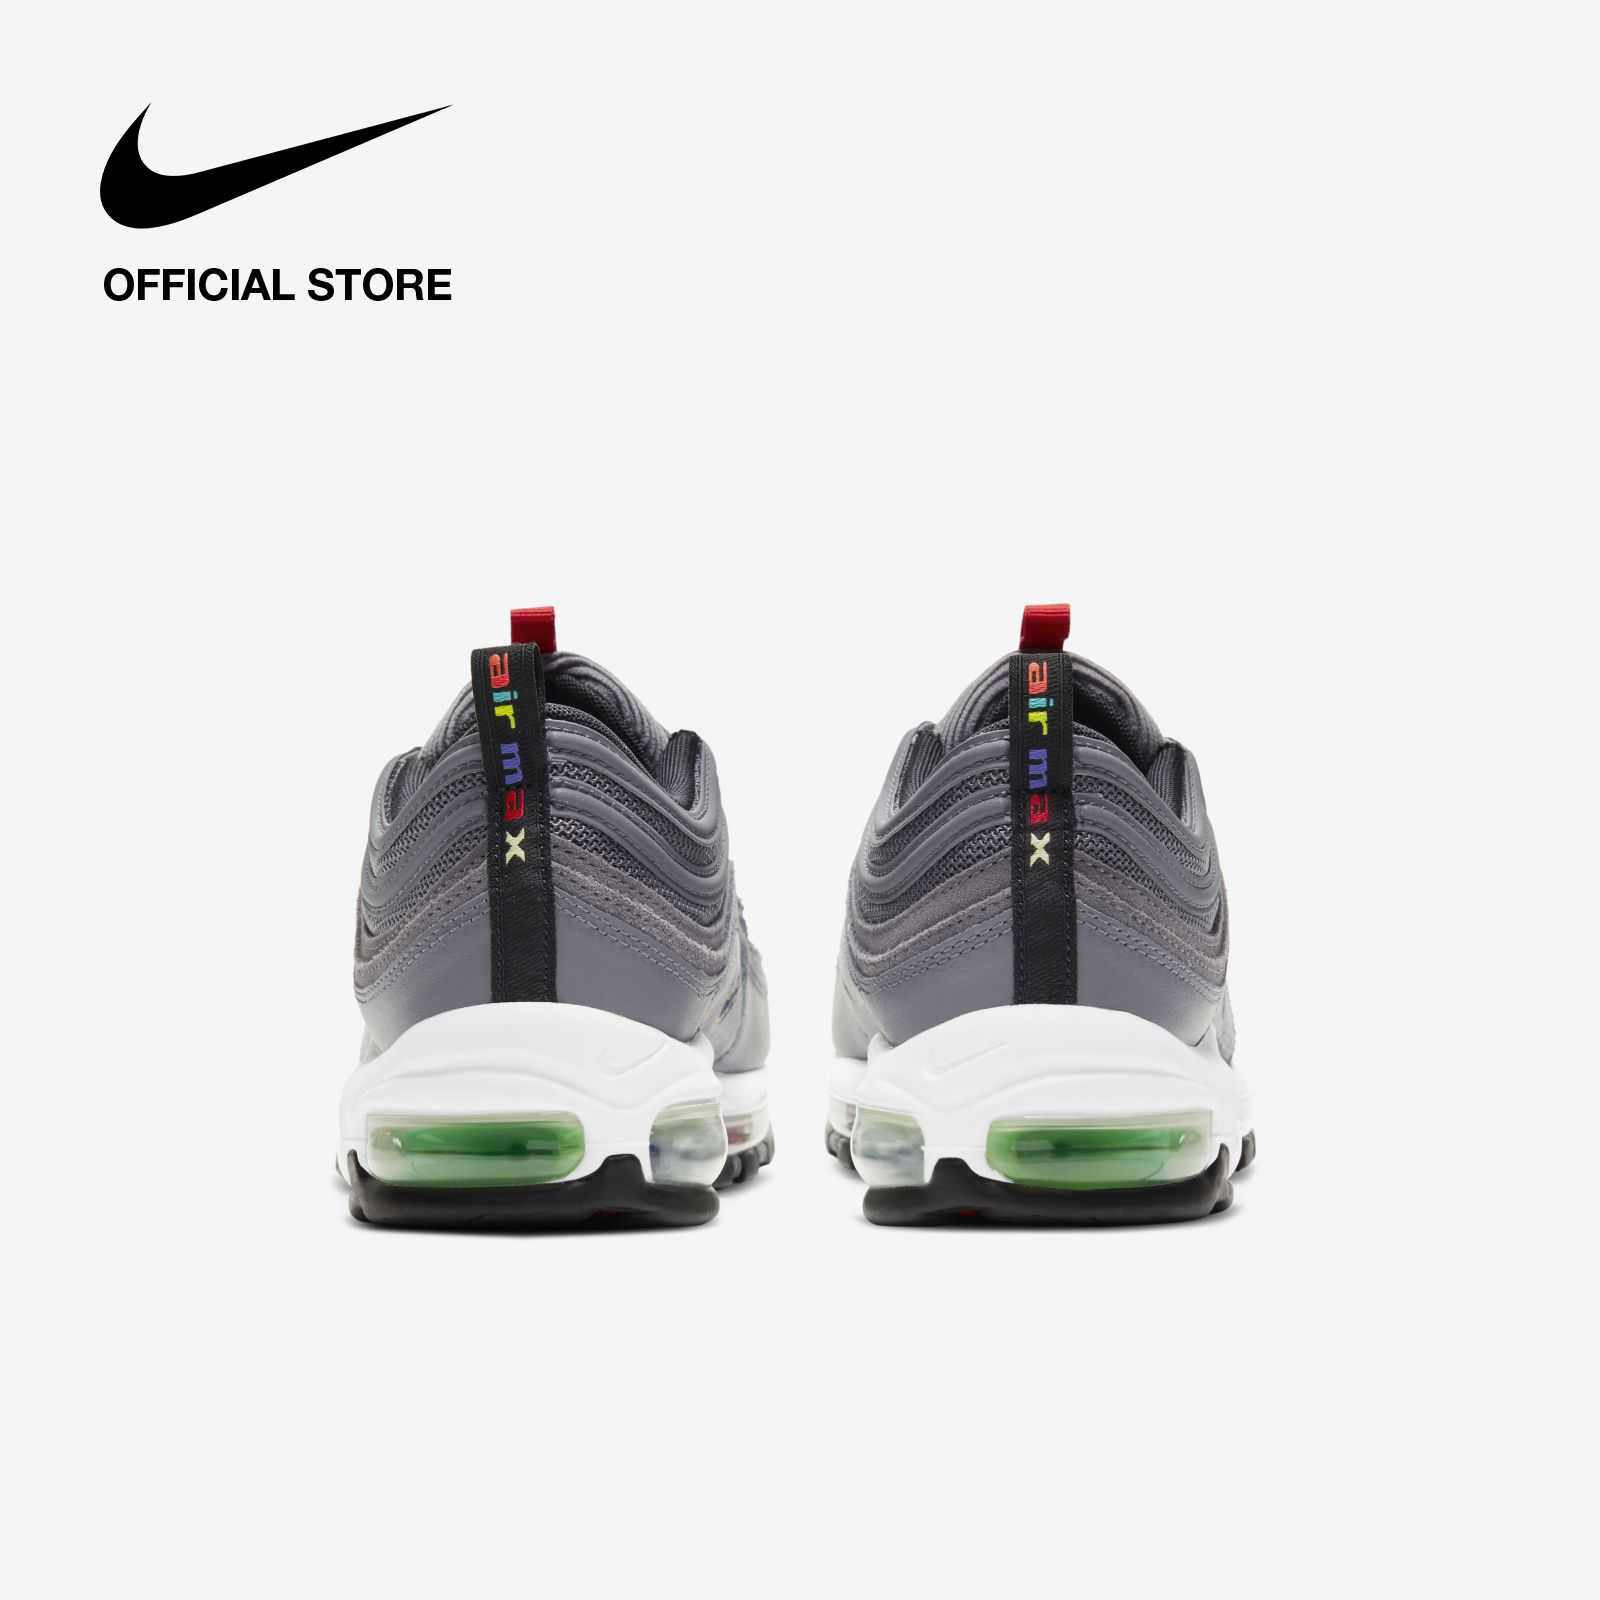 Nike Men's Air Max 97 SE Shoes - Grey รองเท้าผู้ชาย Nike Air Max 97 SE - สีเทา